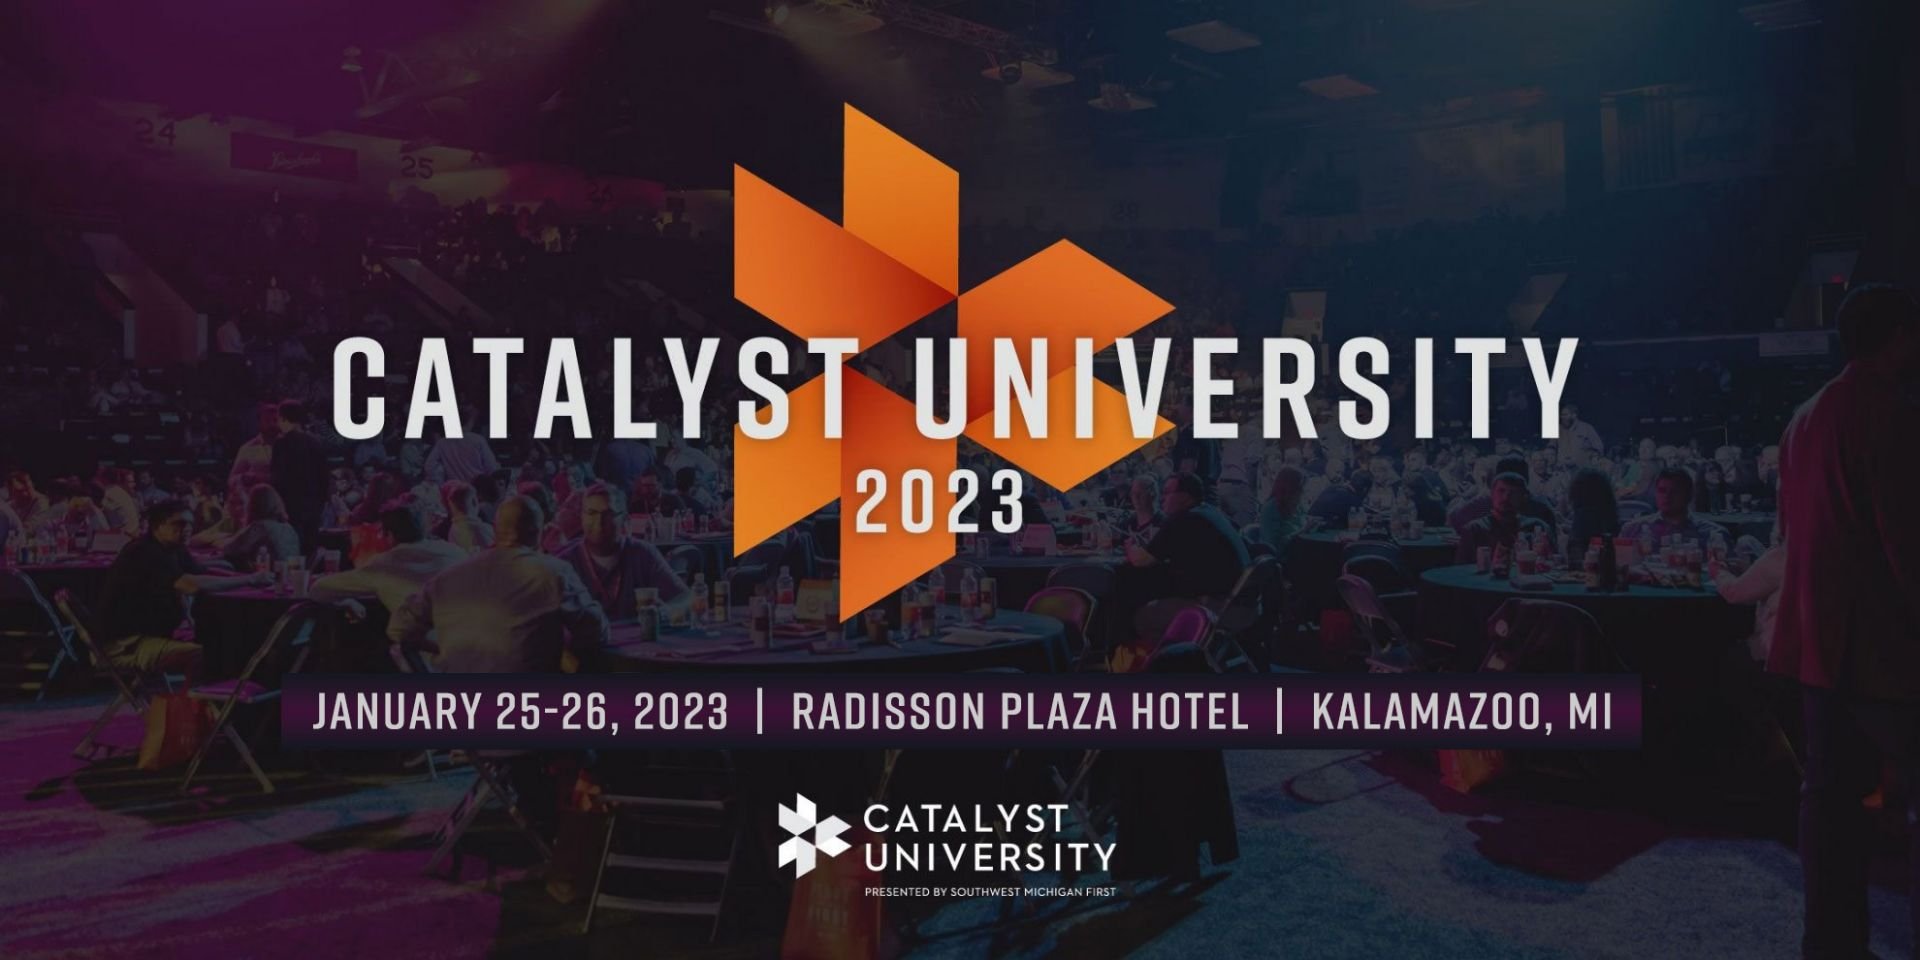 Catalyst University 2023